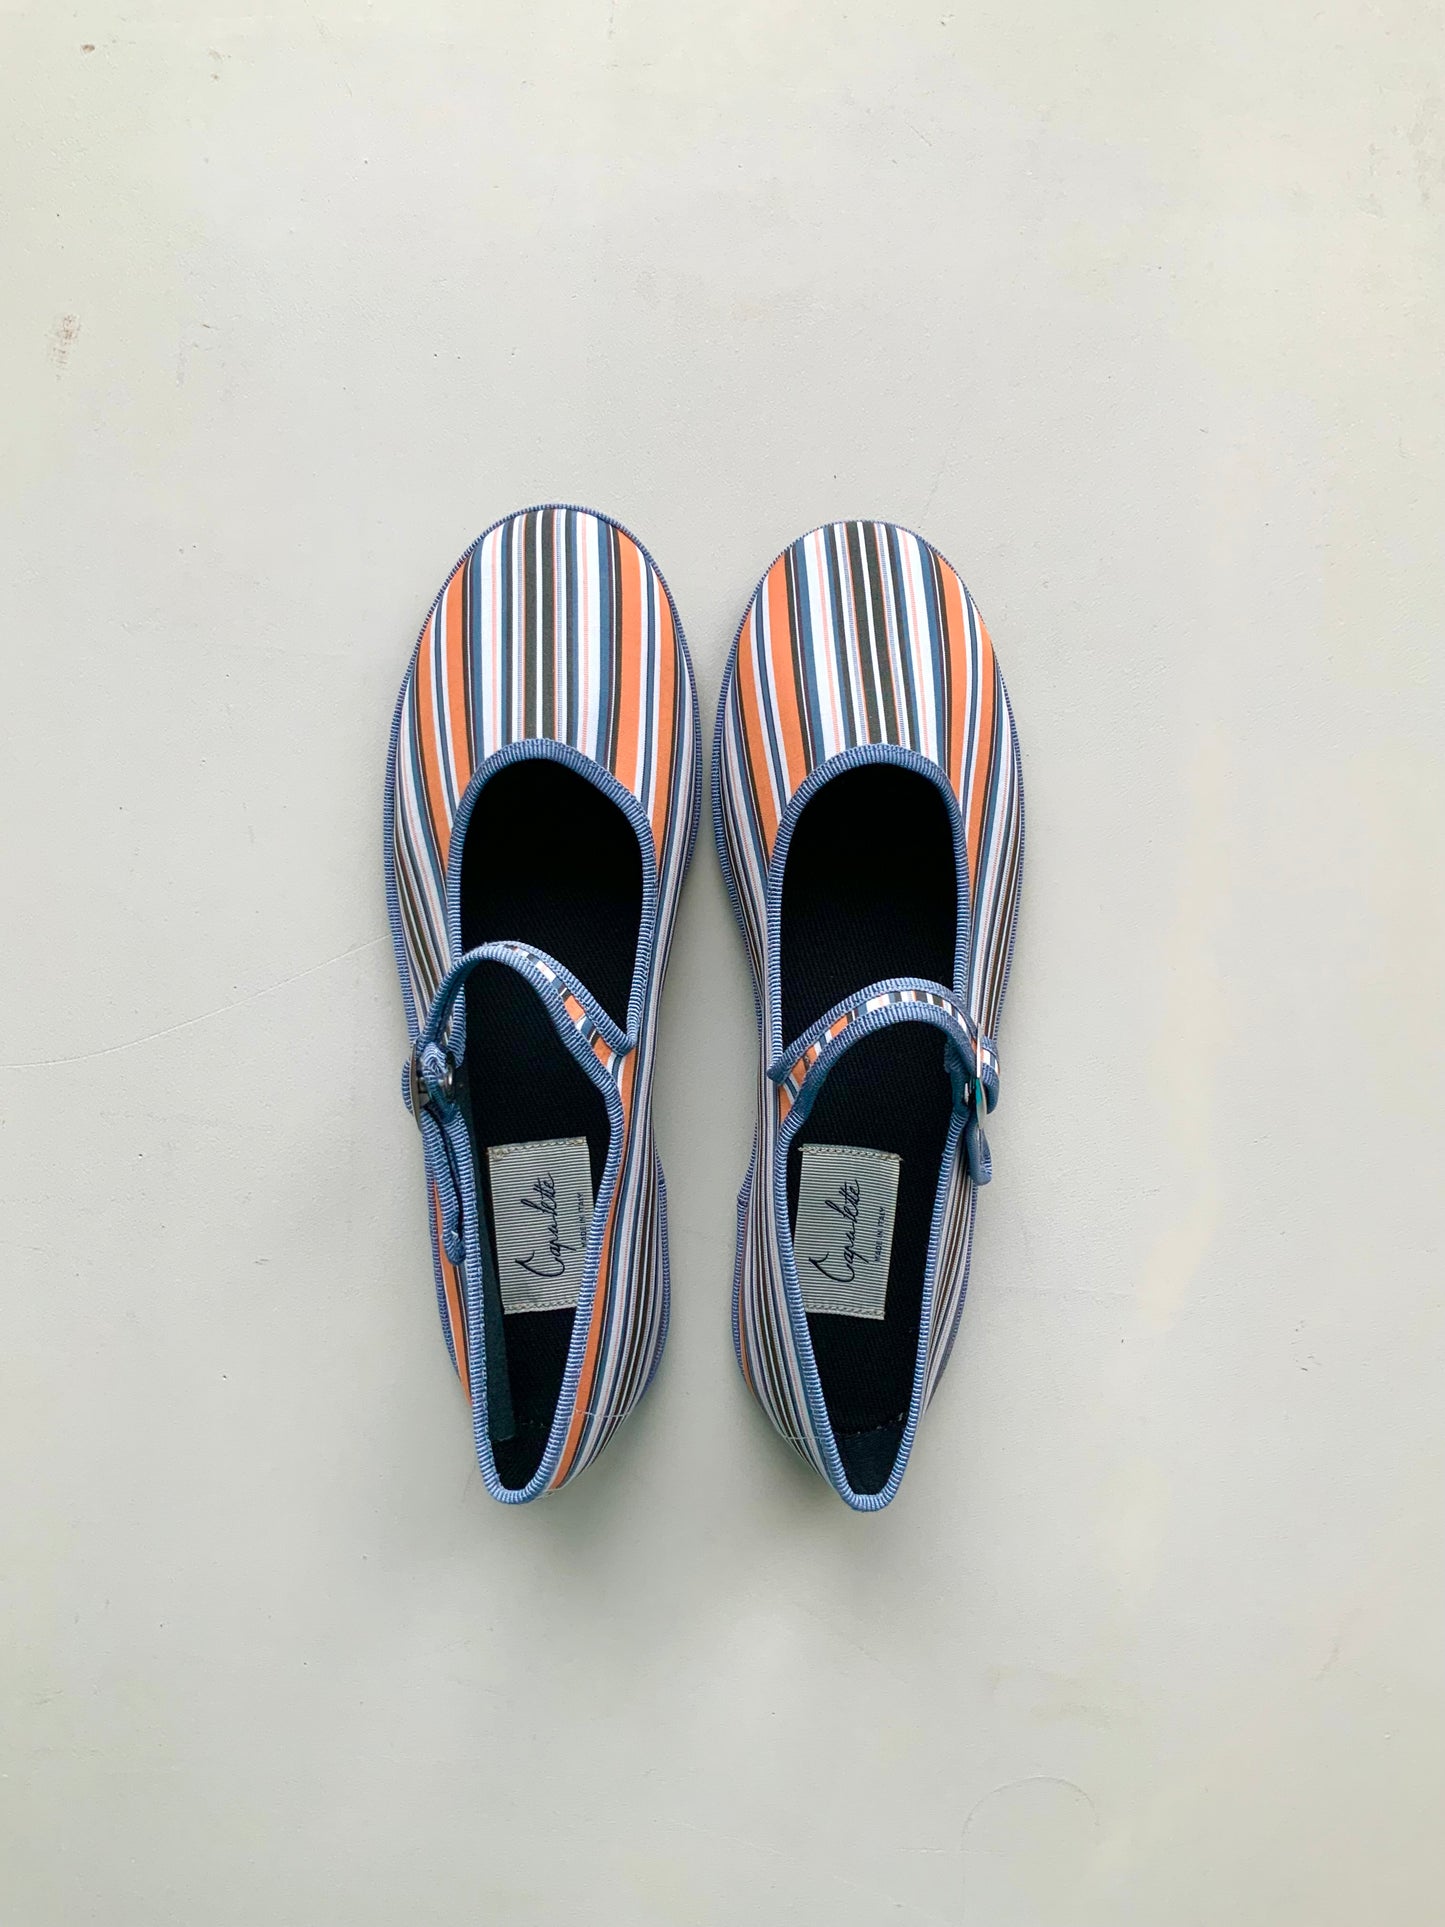 Shoes Women - Friulane Striped Orange Grey